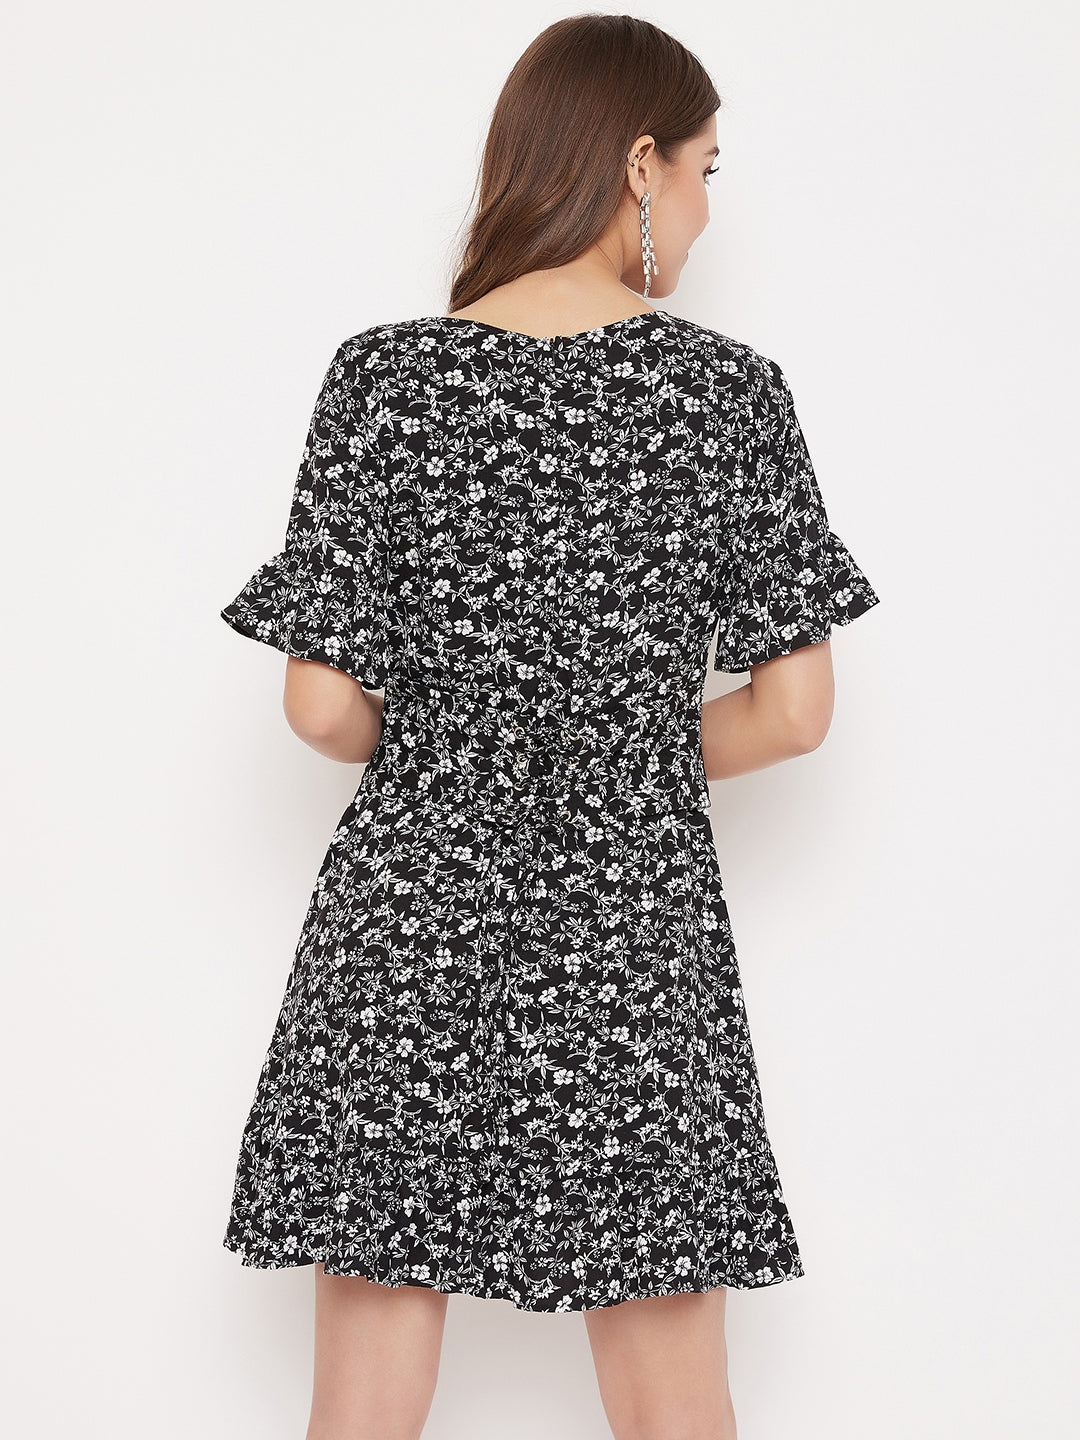 Berrylush Women Black & White Floral Printed V-Neck Bell Sleeve Flared Wrap Mini Dress